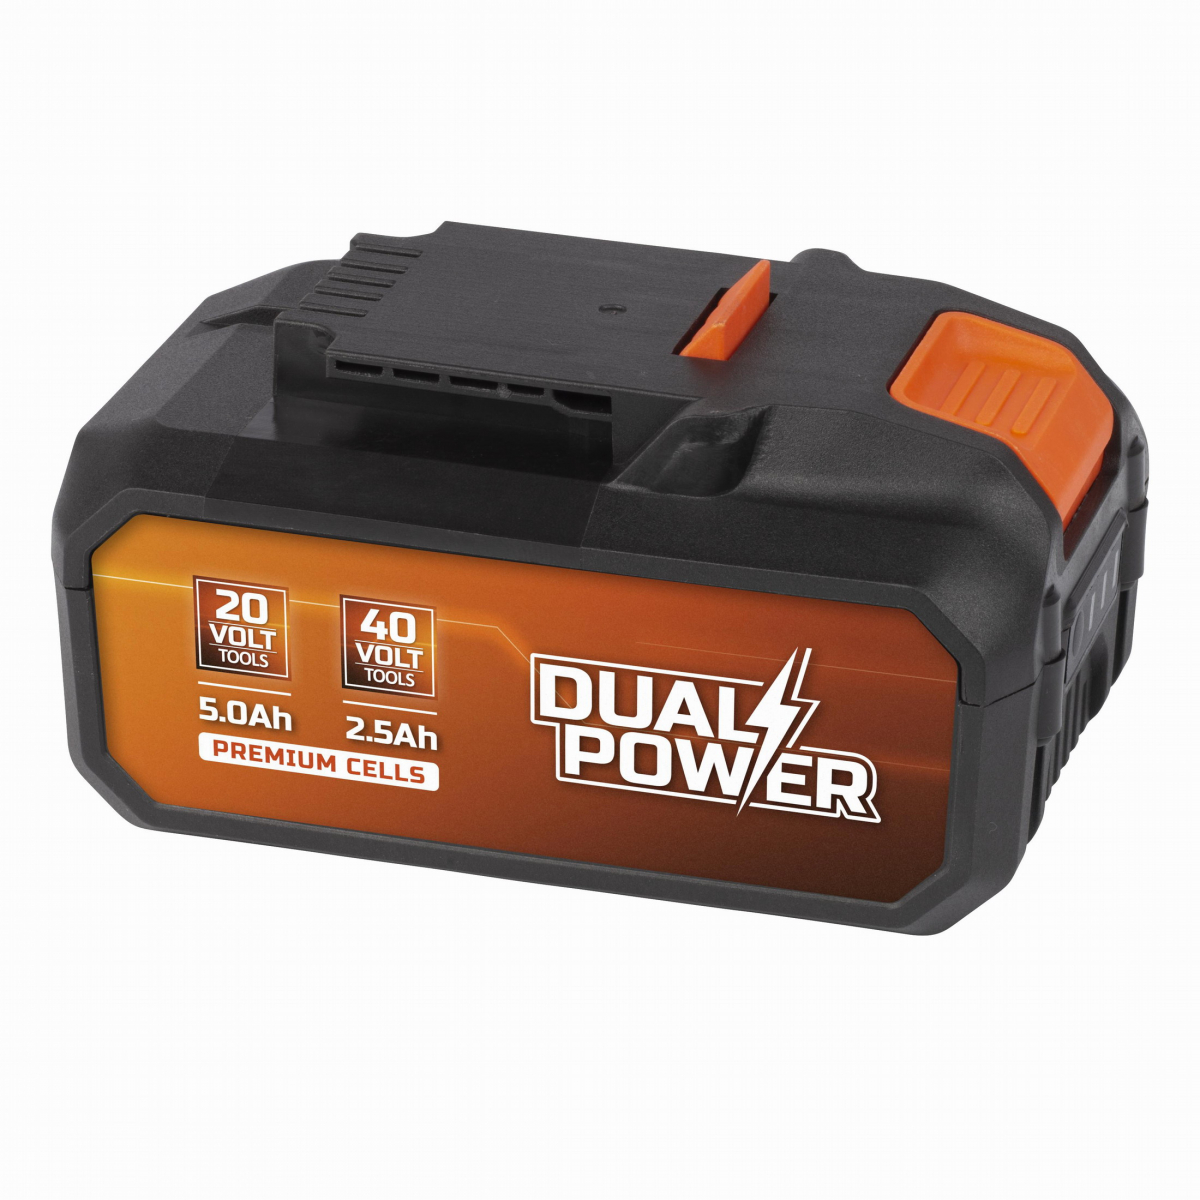 POWDP9037 - Baterie 40V LI-ION 2,5Ah